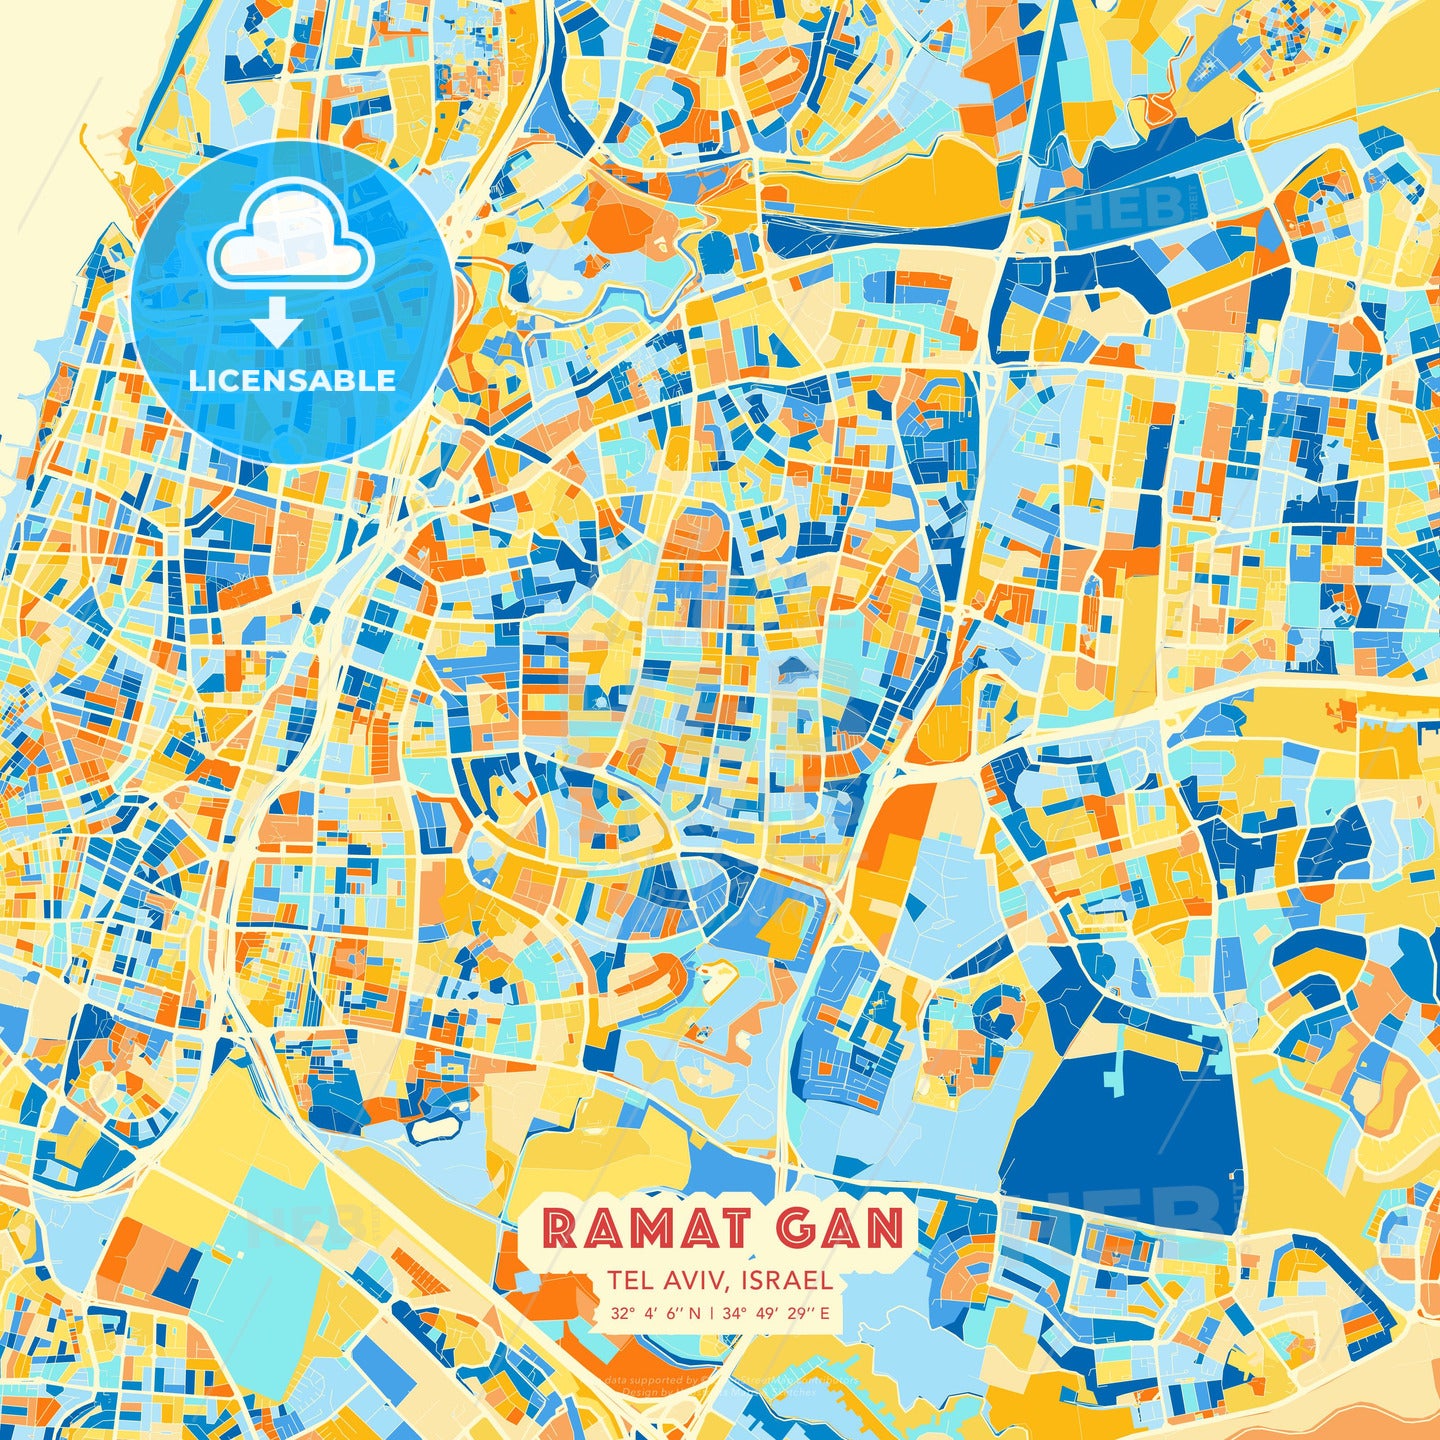 Ramat Gan, Tel Aviv, Israel, map - HEBSTREITS Sketches